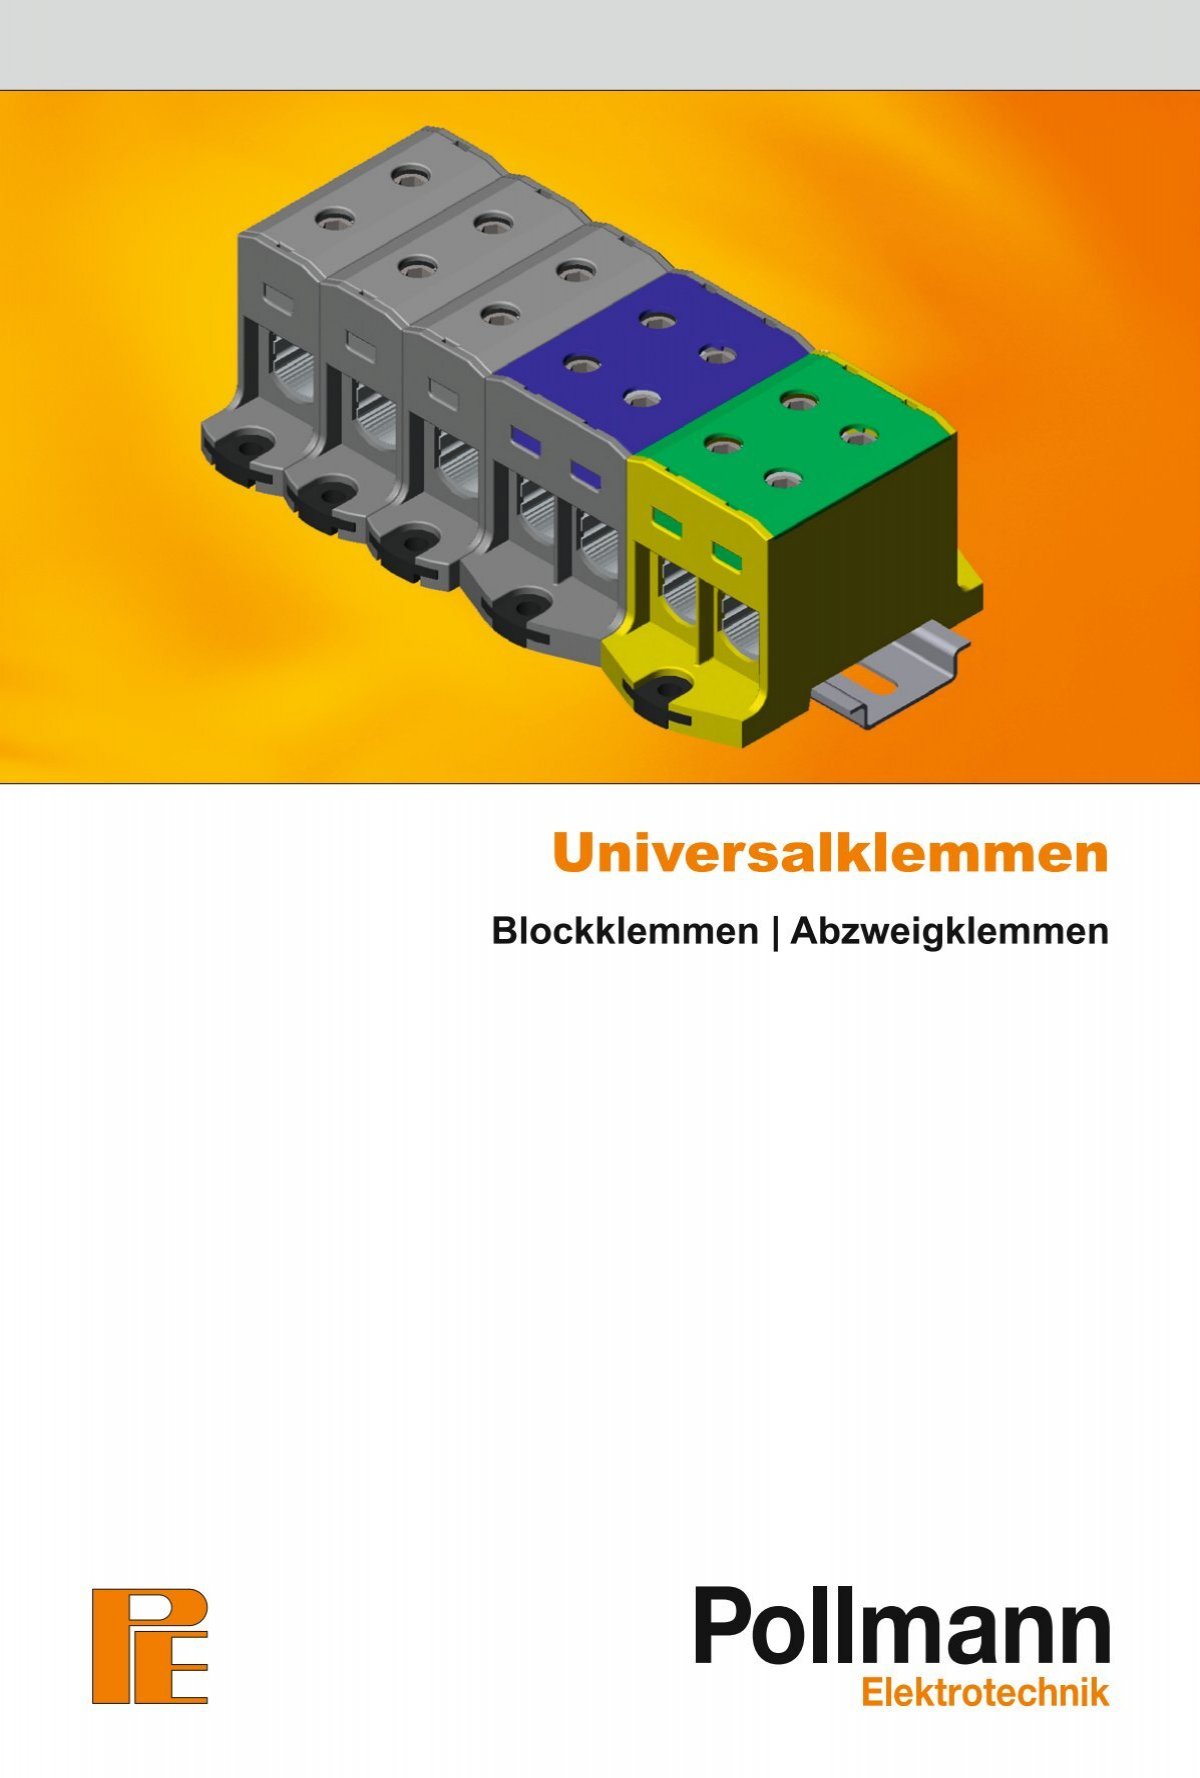 Terminals - Pollmann Elektrotechnik GmbH